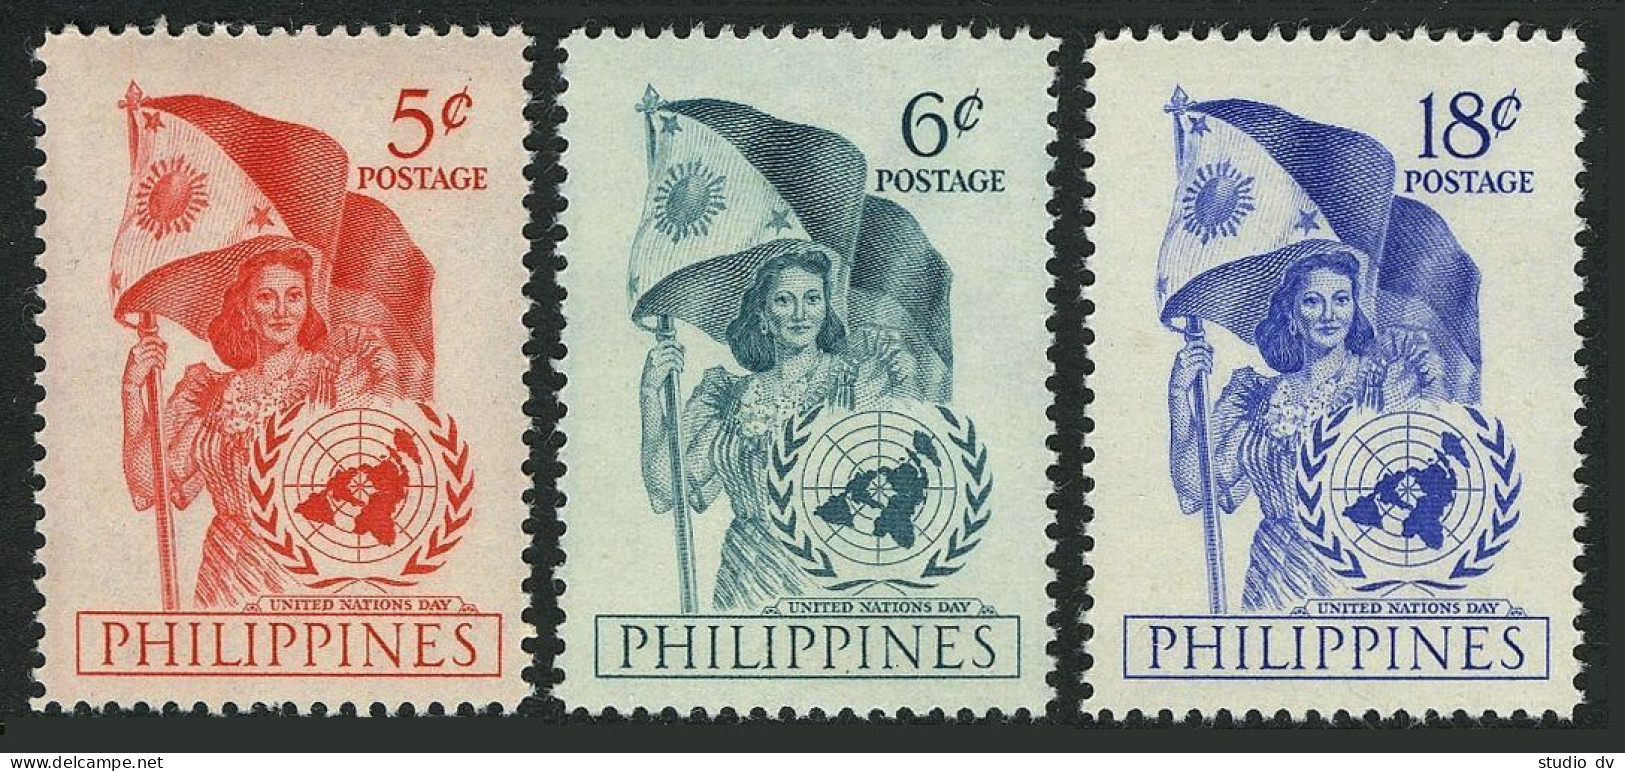 Philippines 569-571,hinged.Michel 540-542. United Nations Day 1951,Emblem,Flag. - Filippijnen